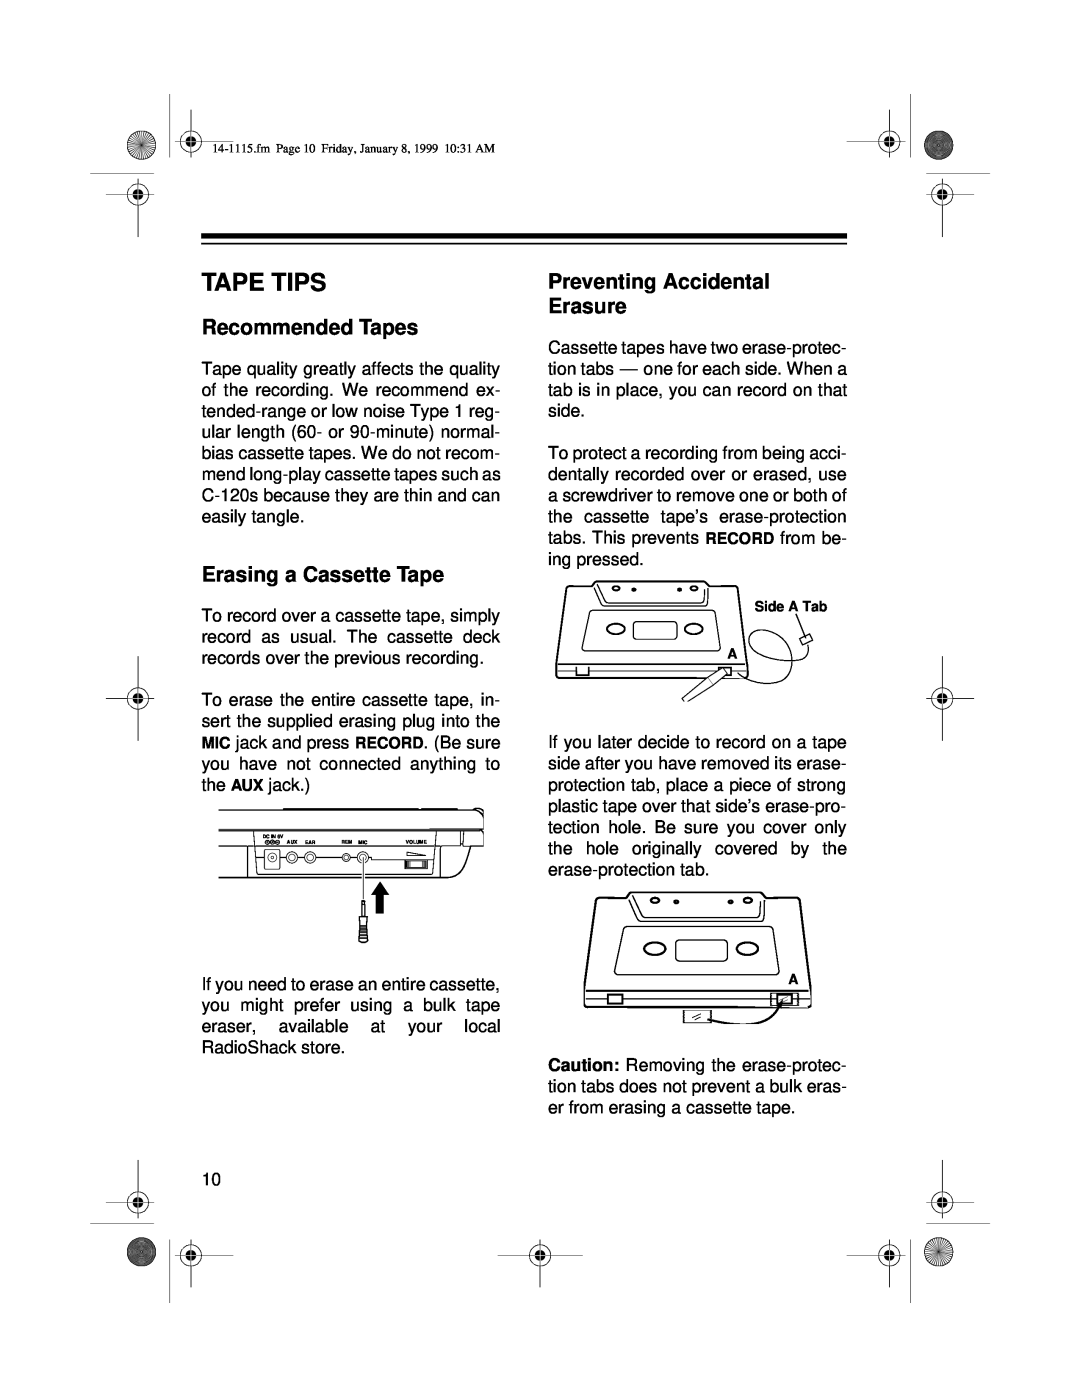 Optimus CTR-108 owner manual Tape Tips, Recommended Tapes, Erasing a Cassette Tape, Preventing Accidental Erasure 